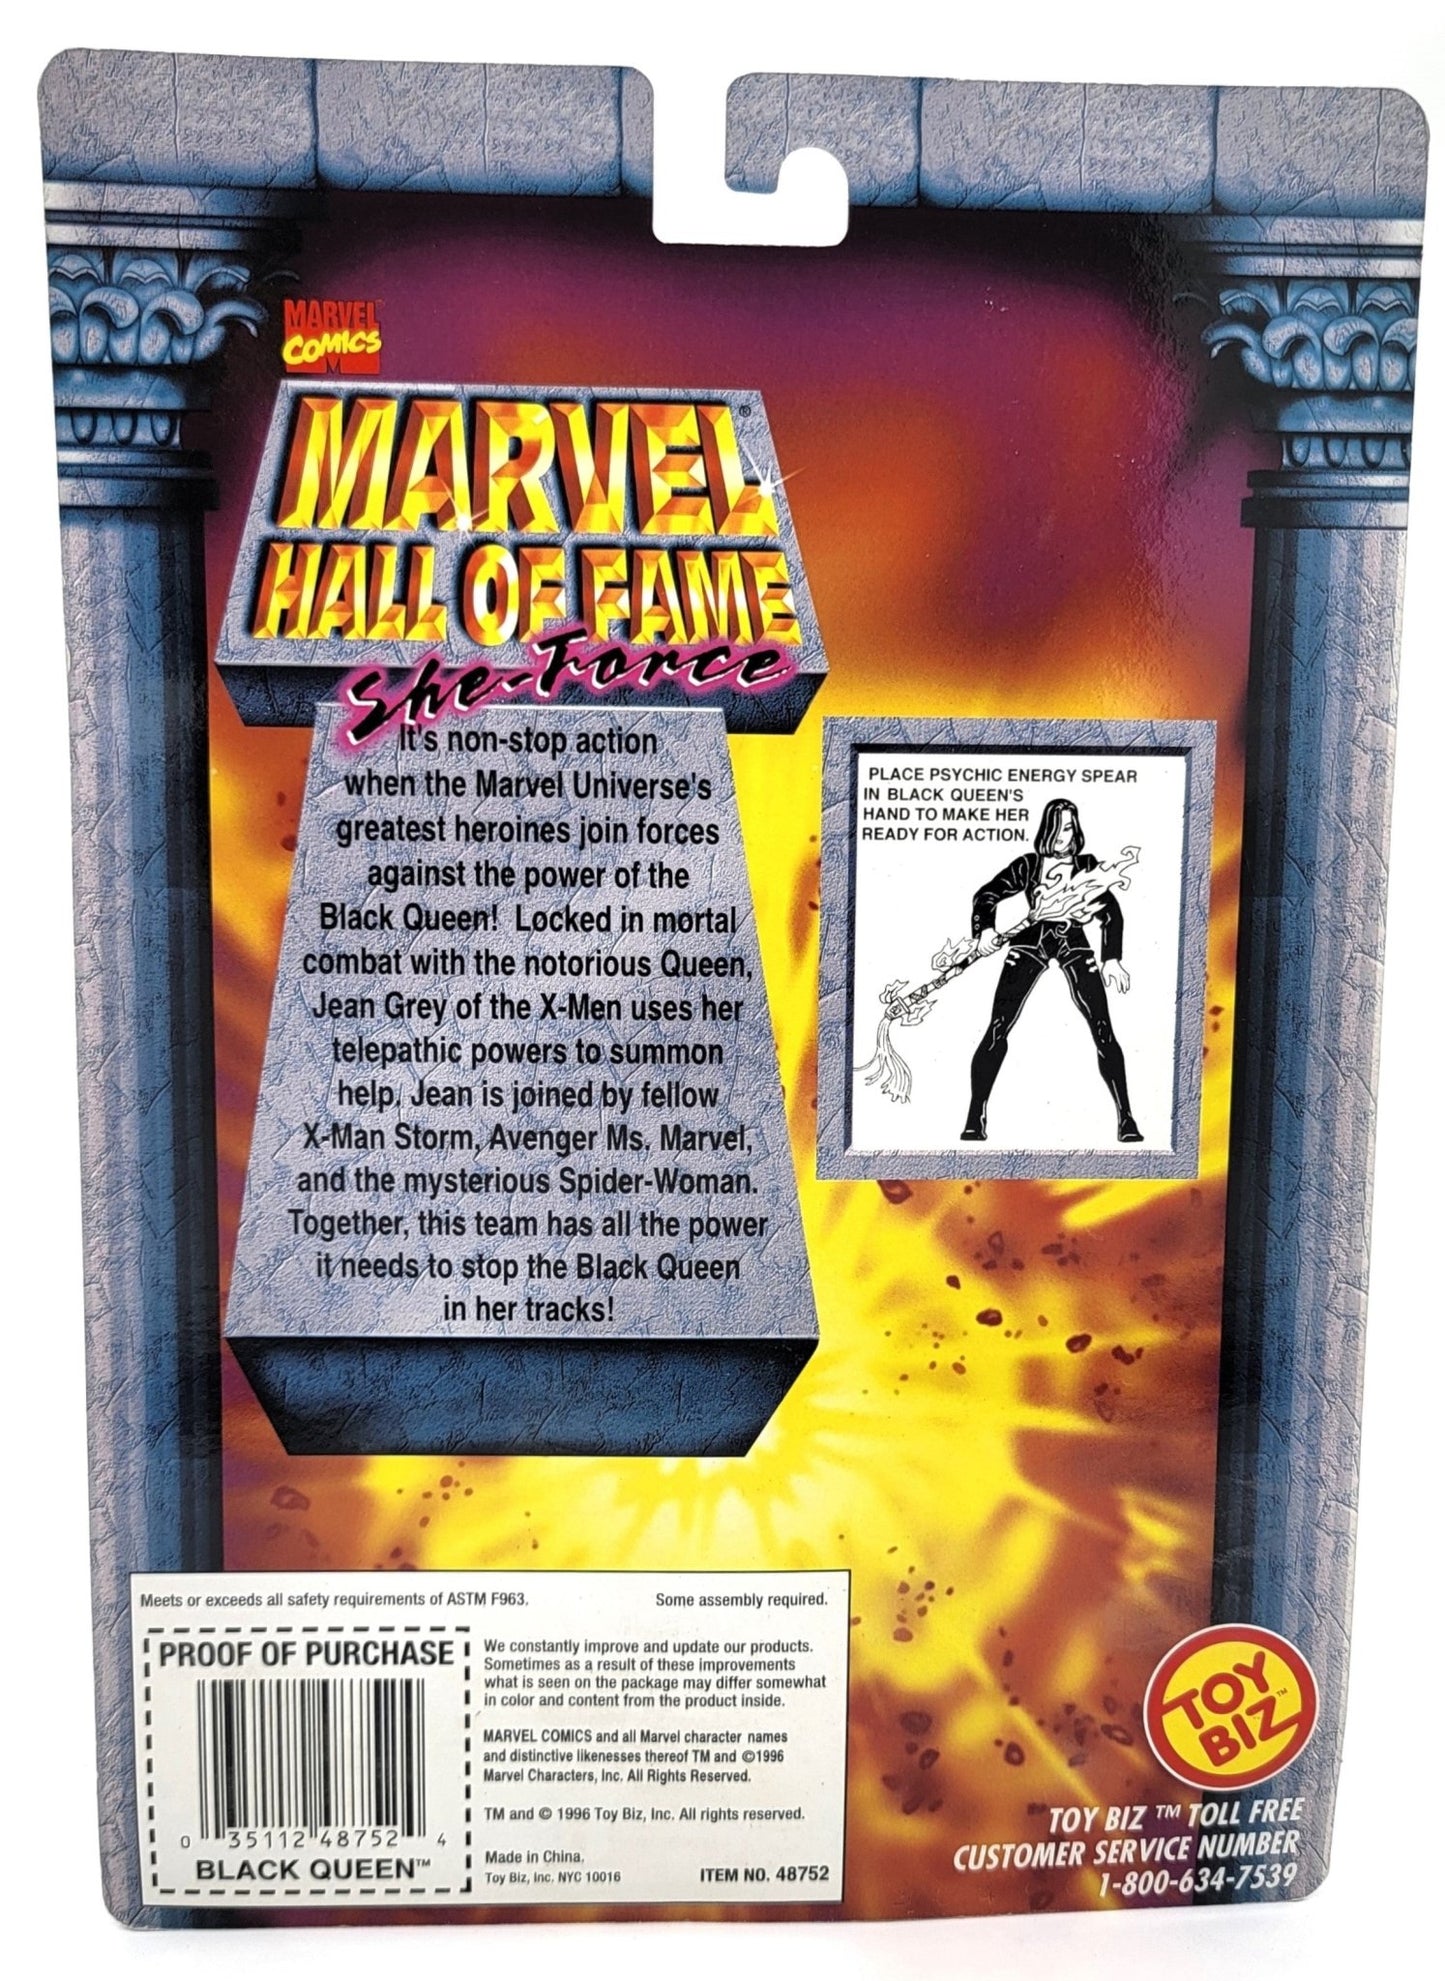 Toy Biz - Toy Biz | Marvel Hall of Fame - She Force Black Queen | Vintage Marvel Action Figure - Action Figures - Steady Bunny Shop